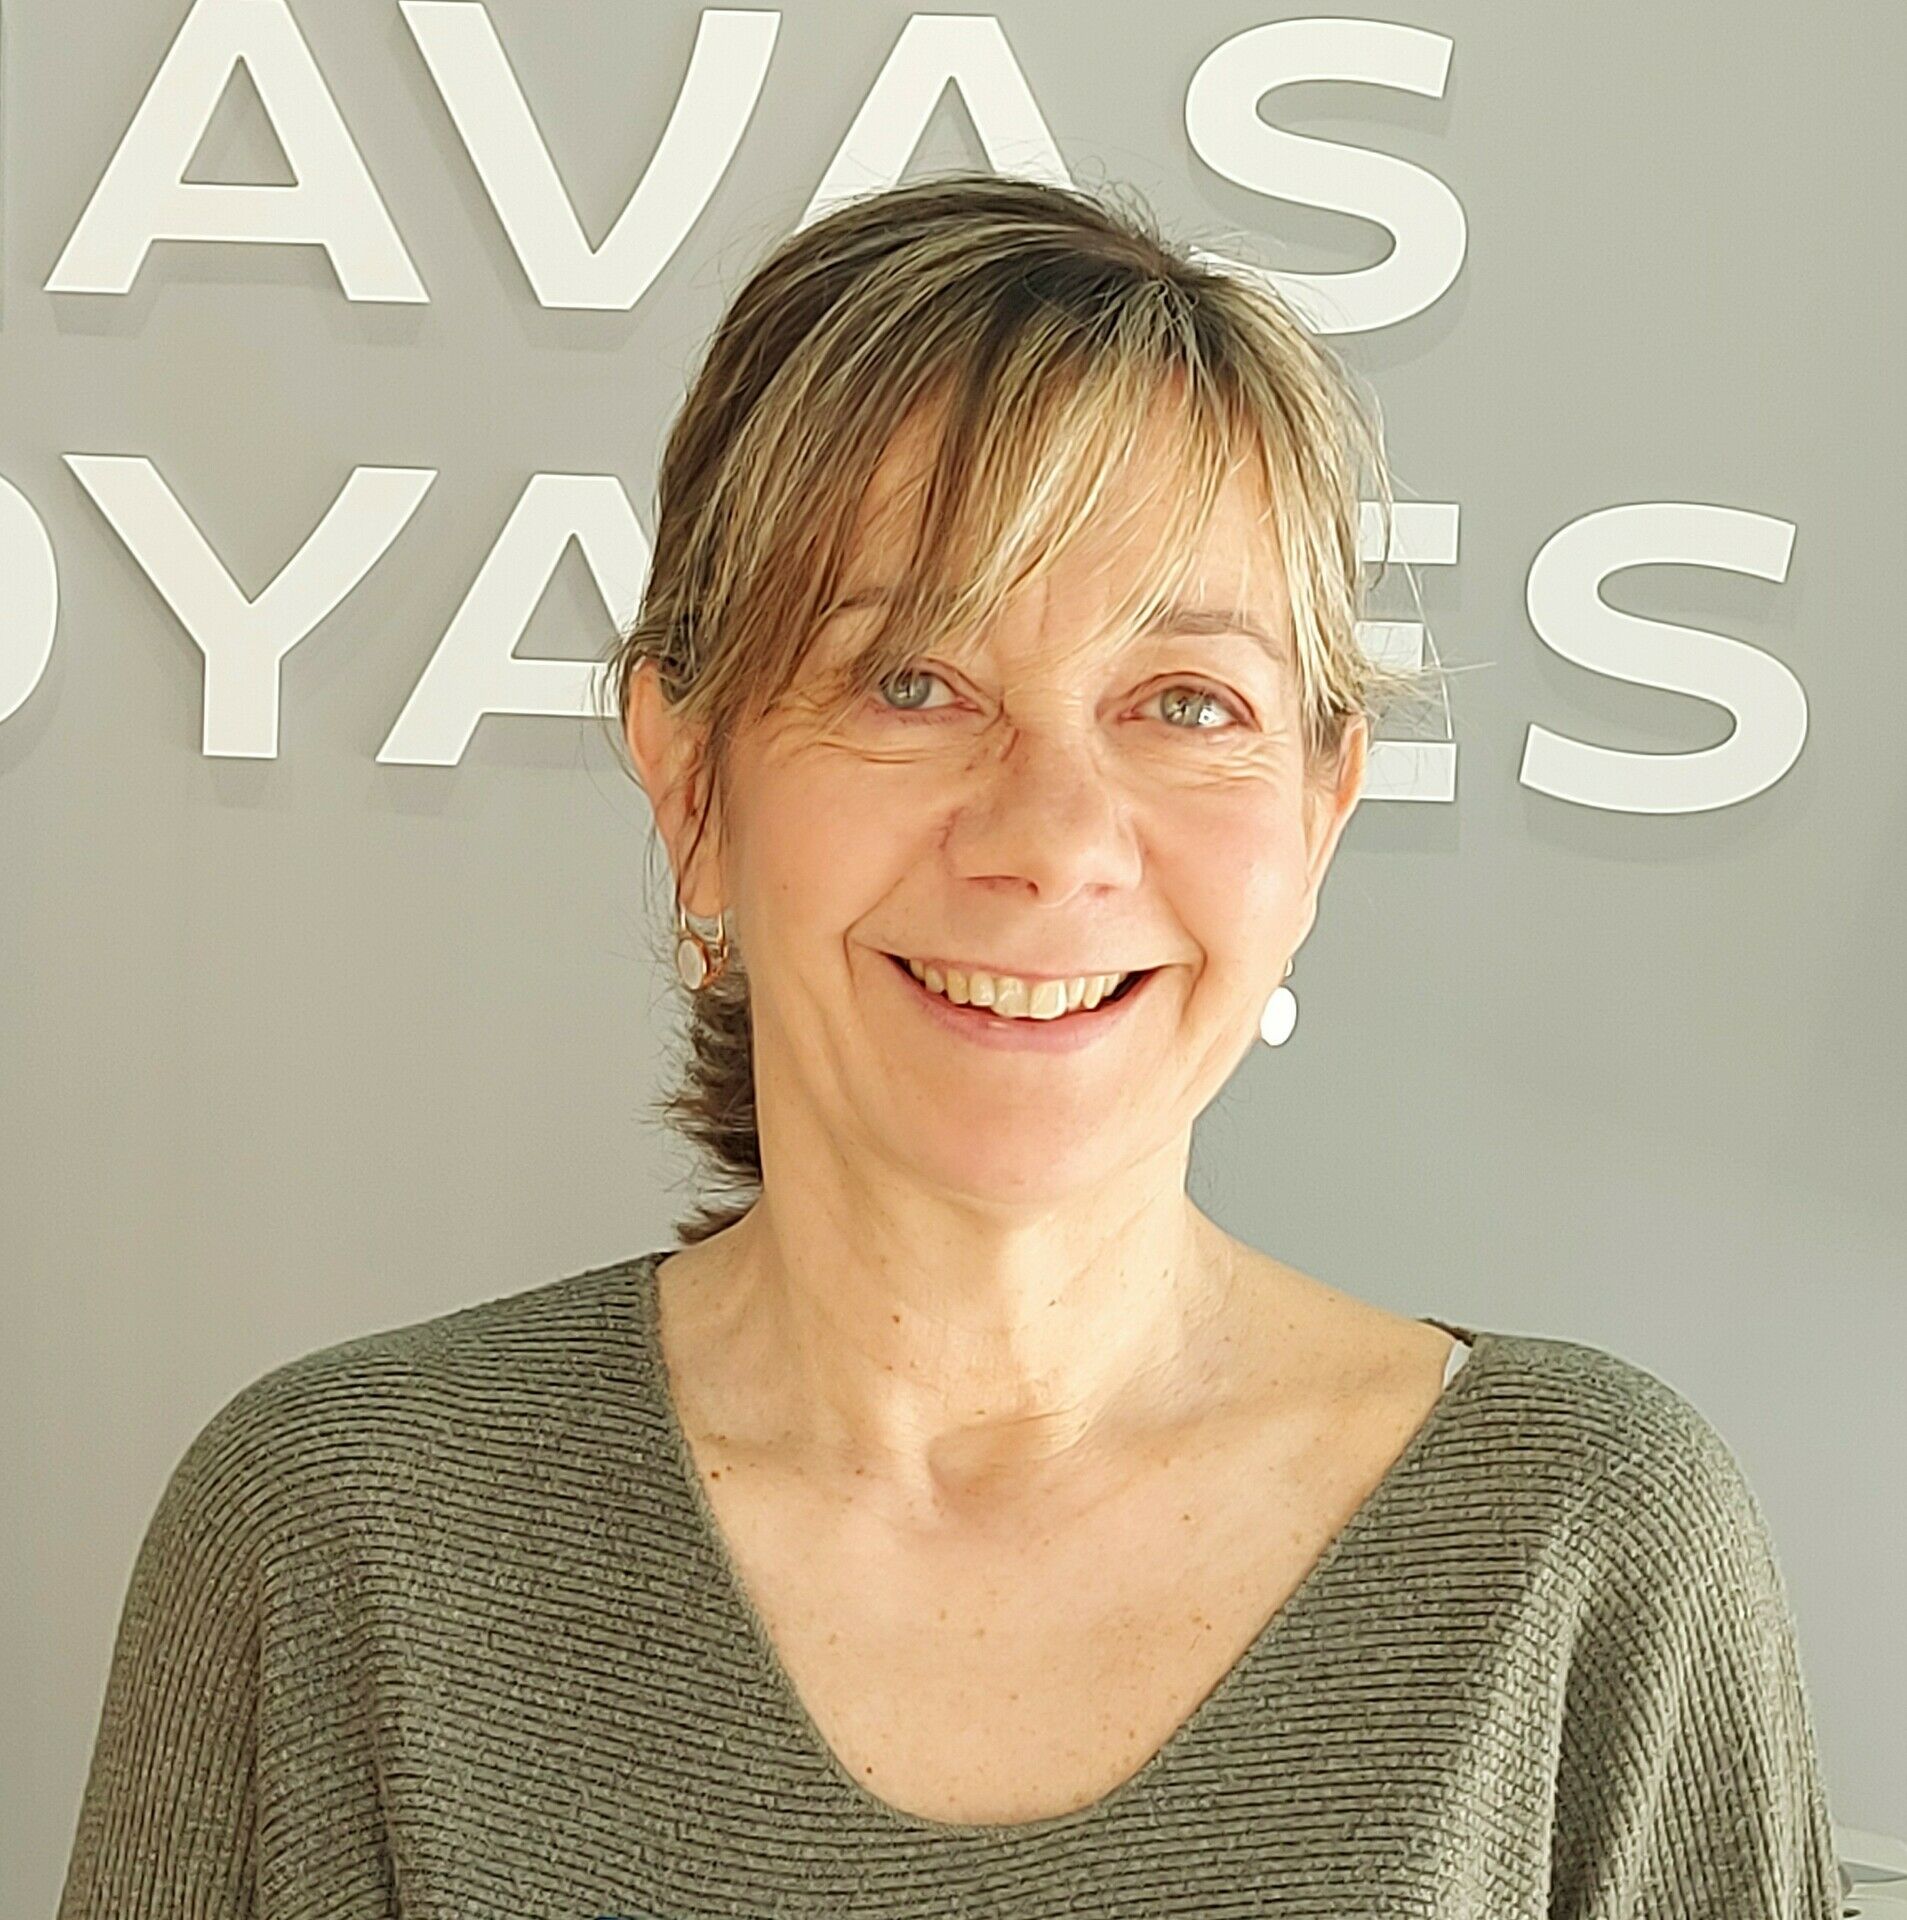 Havas Voyages Laval - Nathalie #2